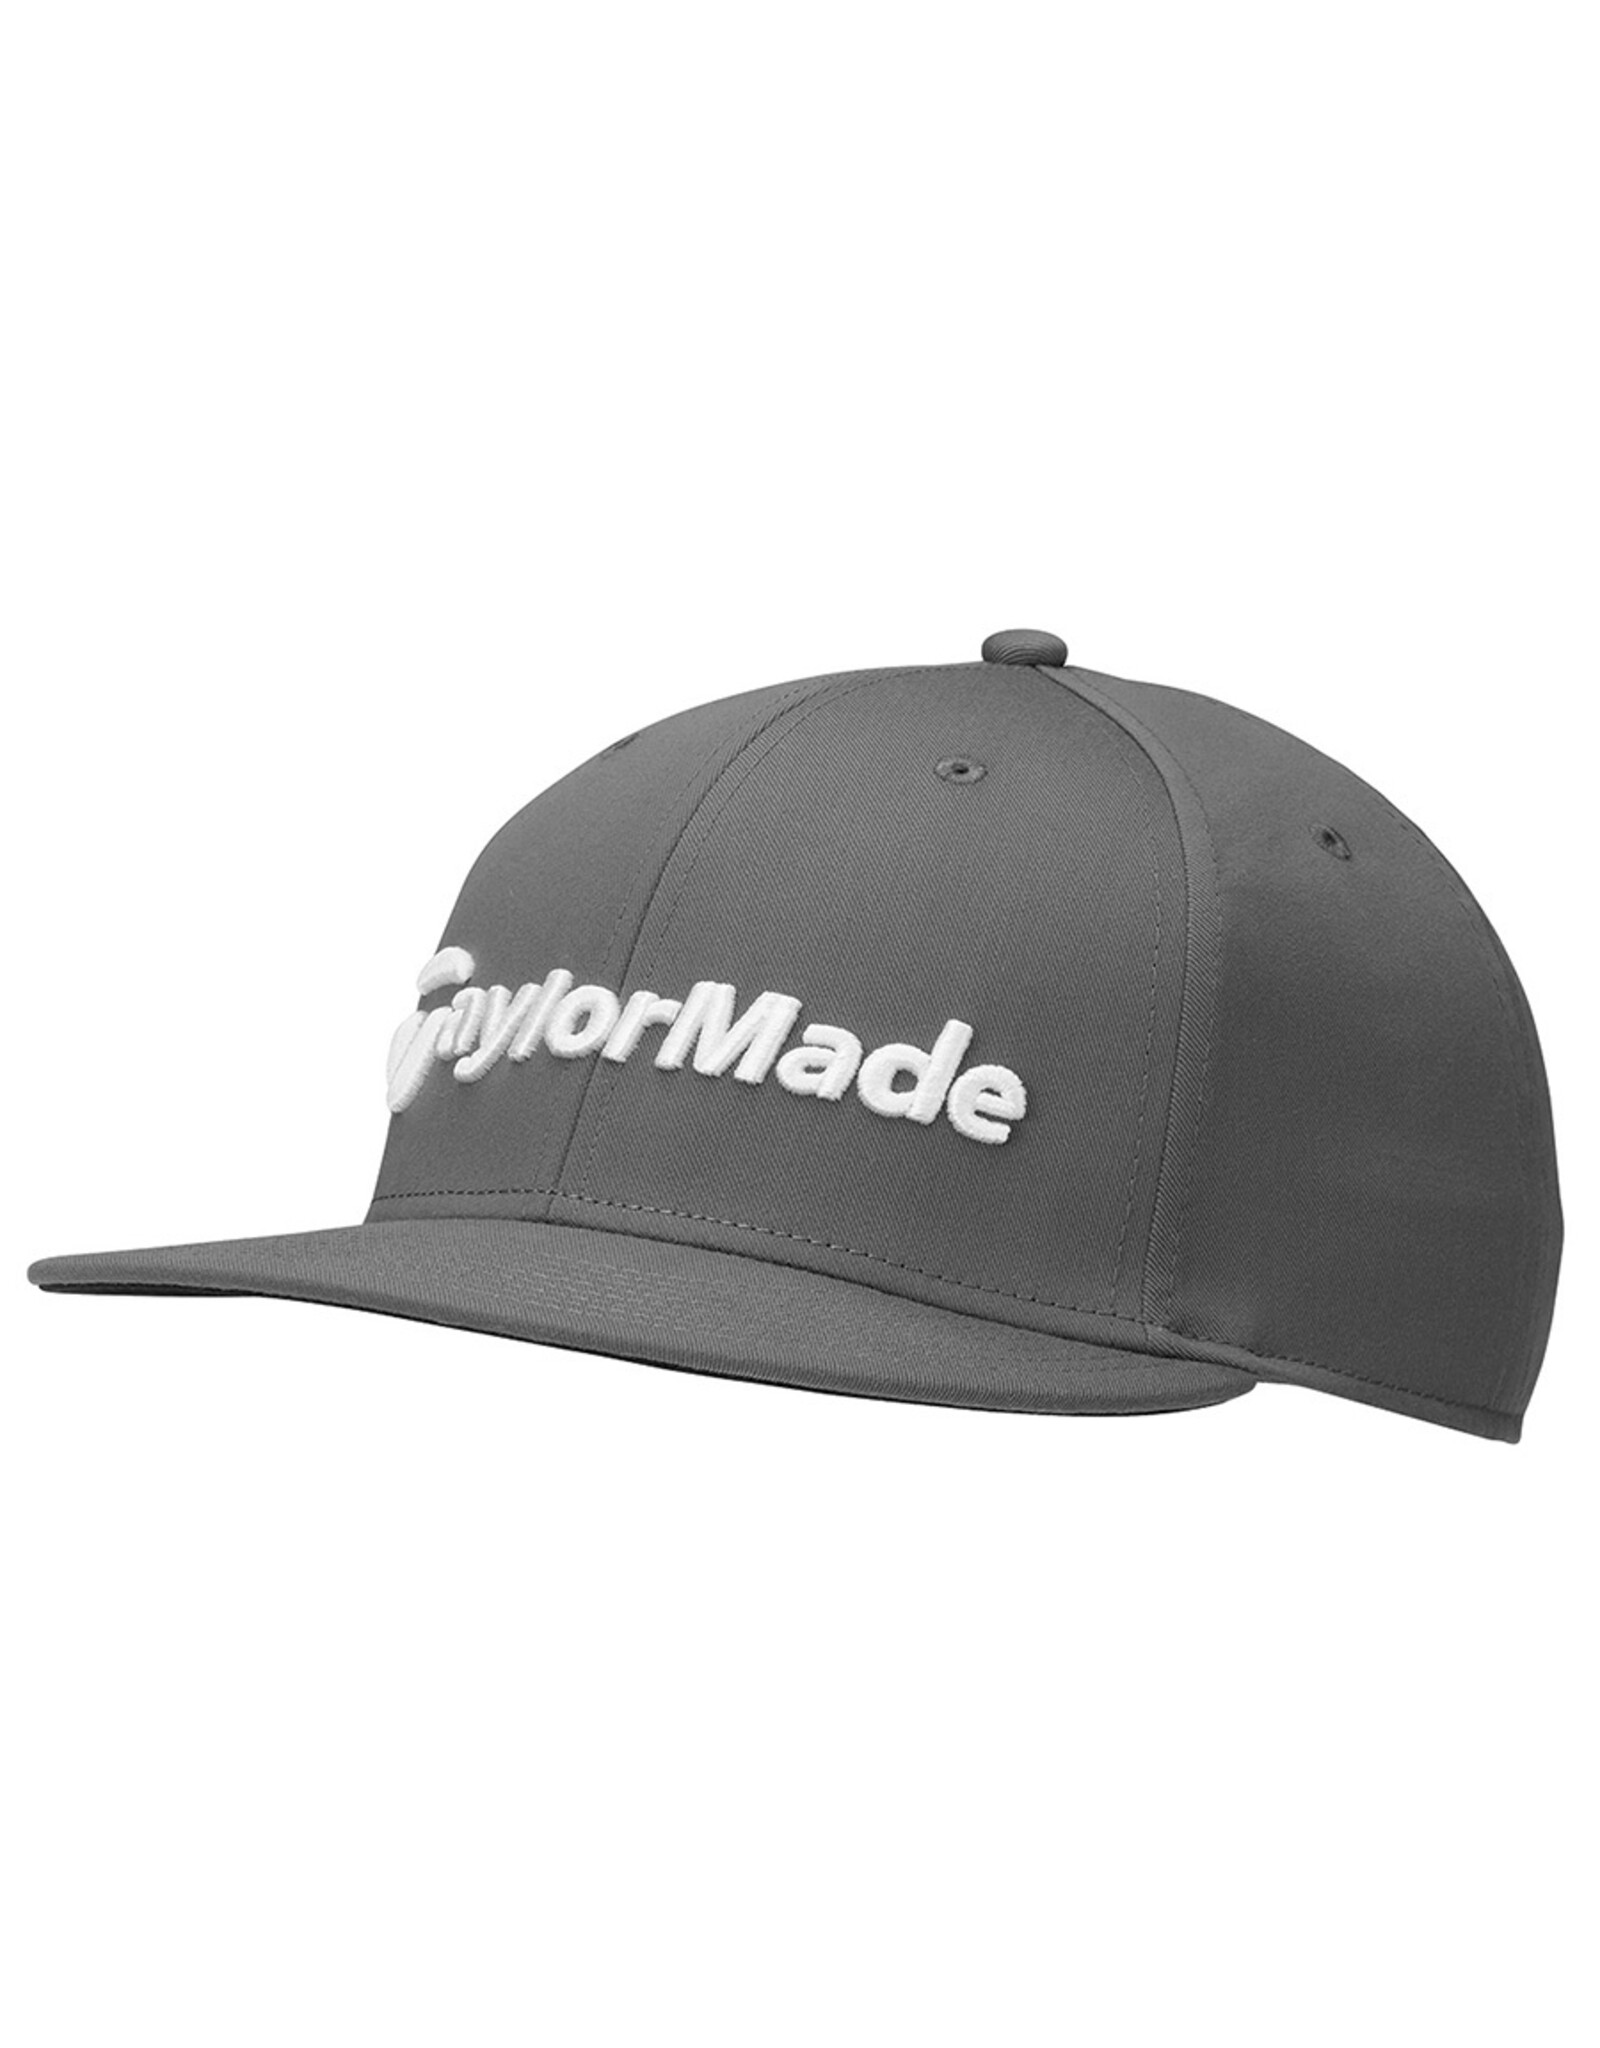 TaylorMade TaylorMade Tour Flatbill Snapback Hat